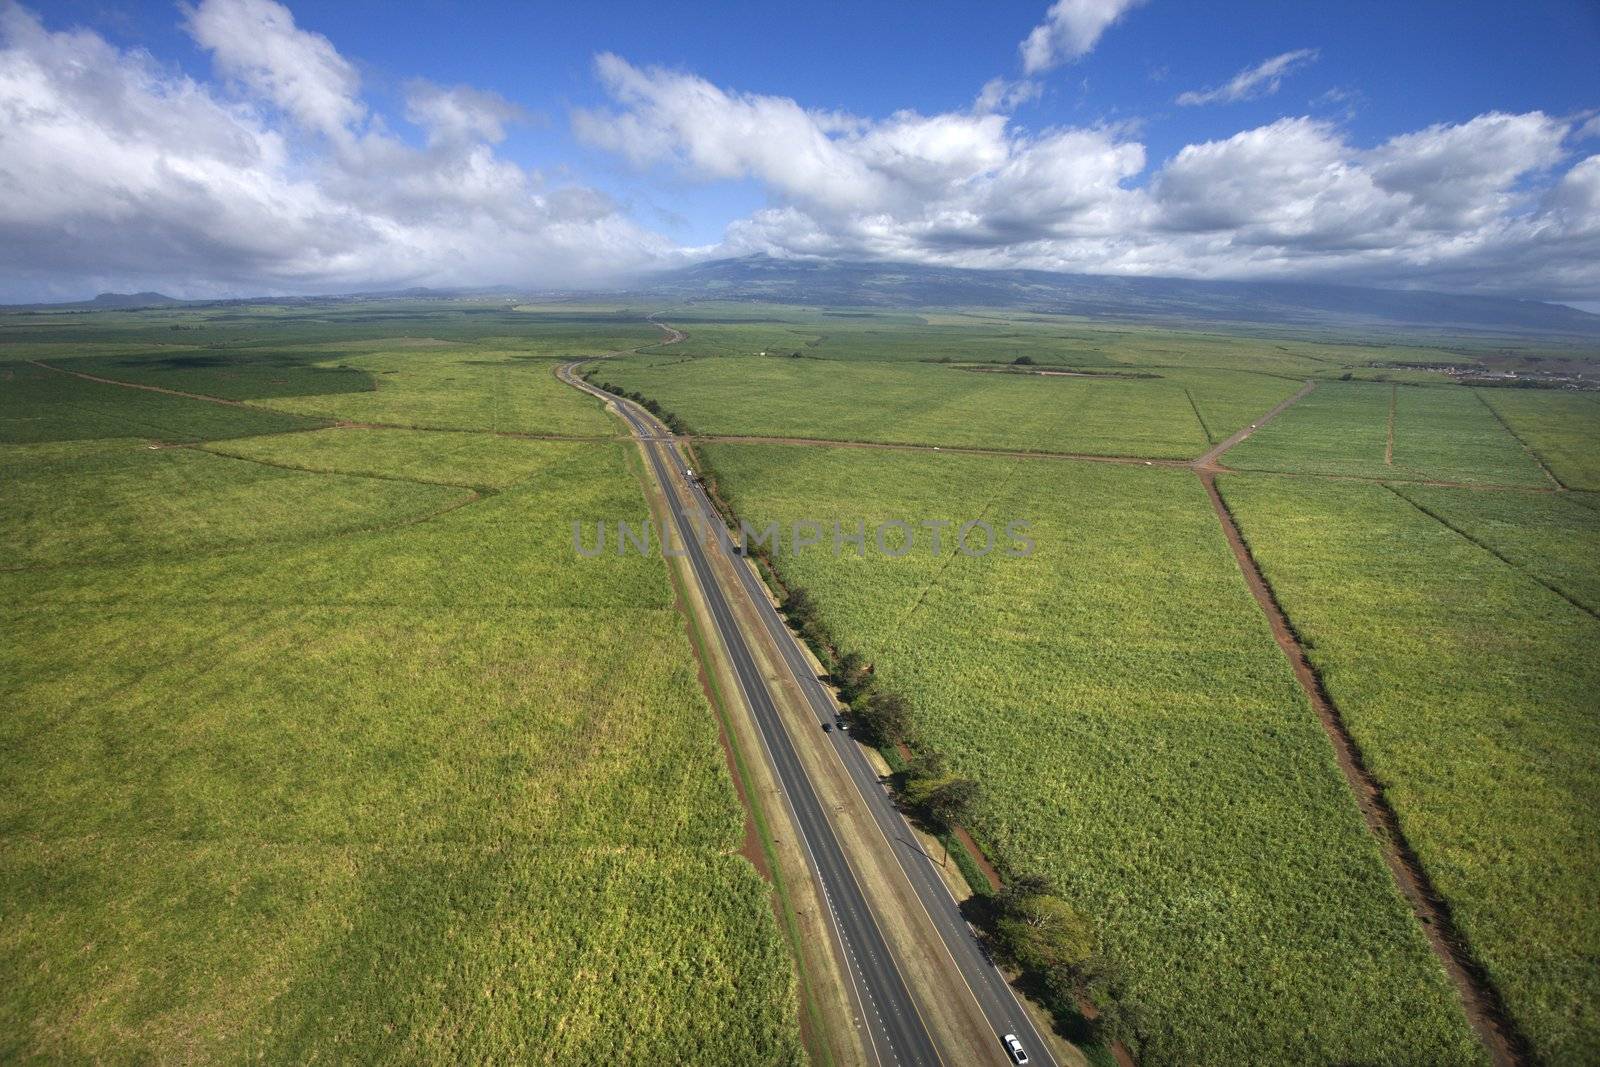 Aerial view of road passing through farmland fields in Maui, Hawaii.